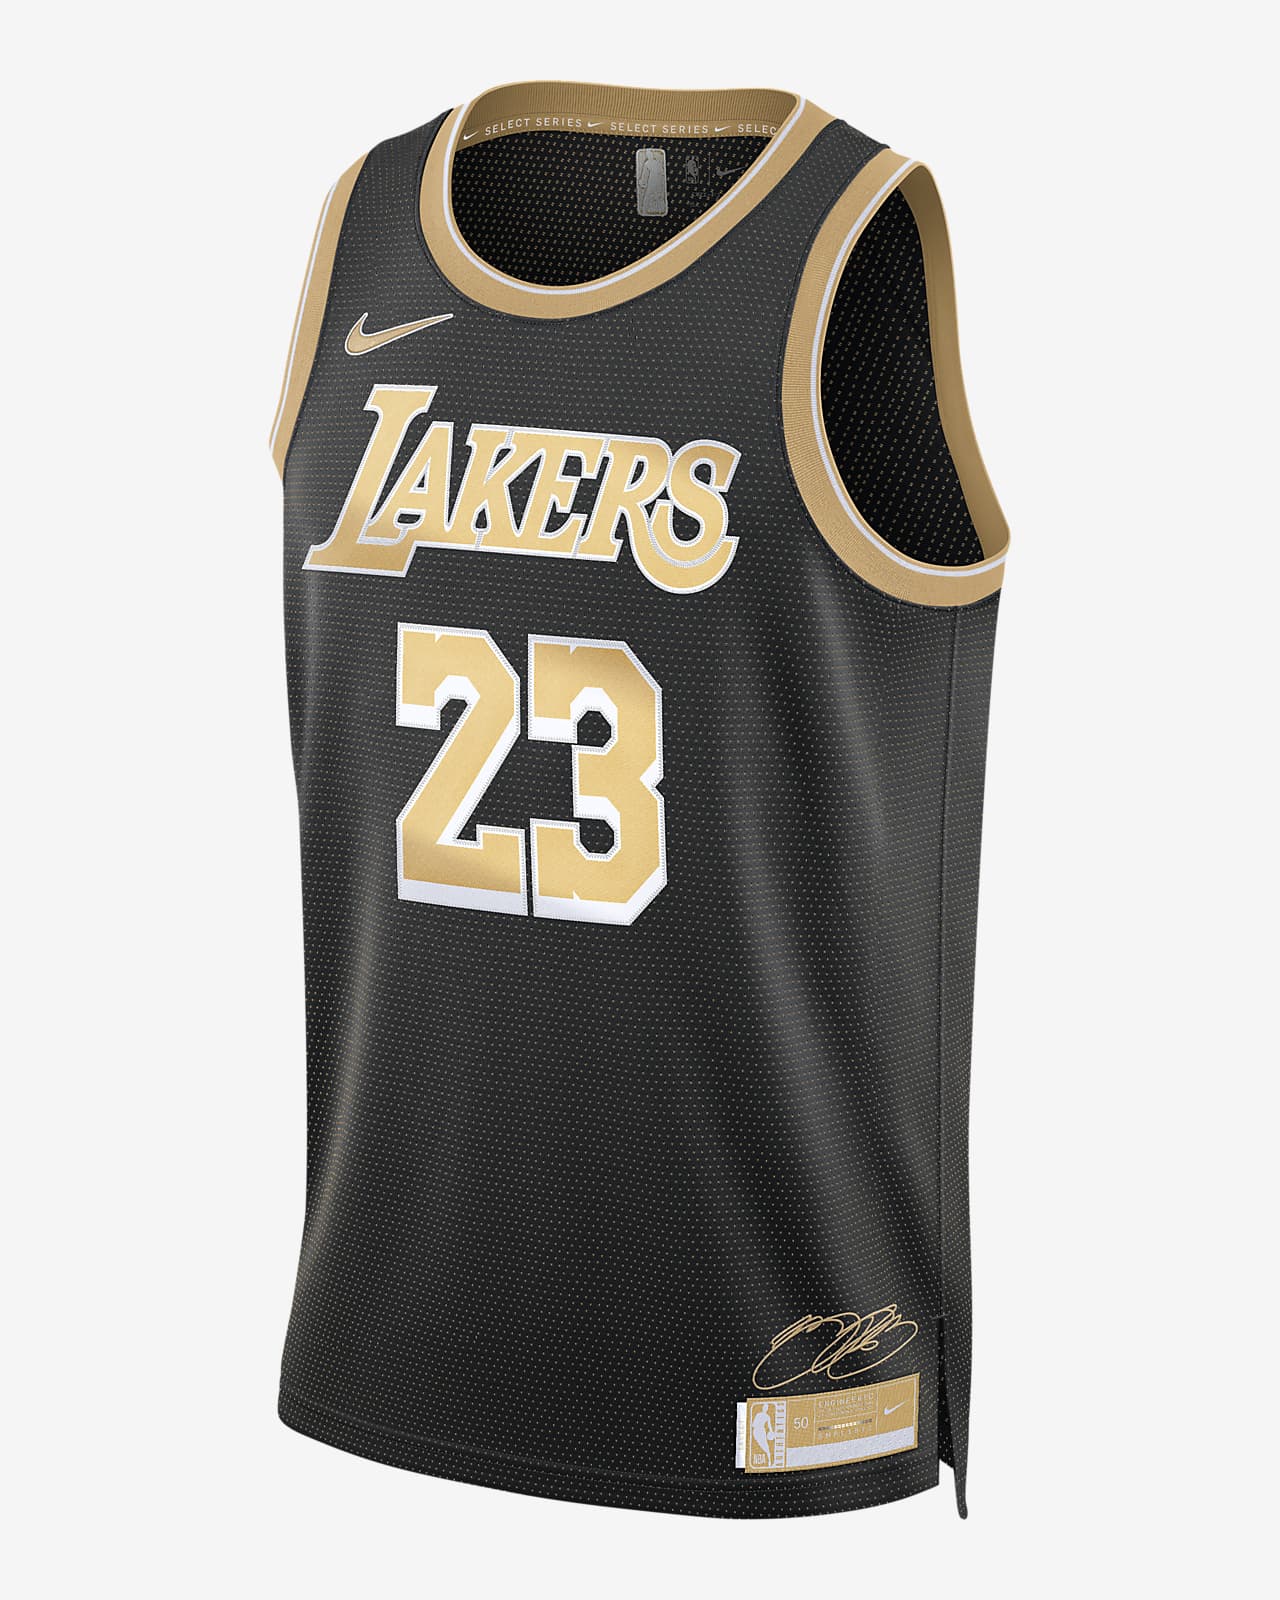 LeBron James Lakers Nike jersey